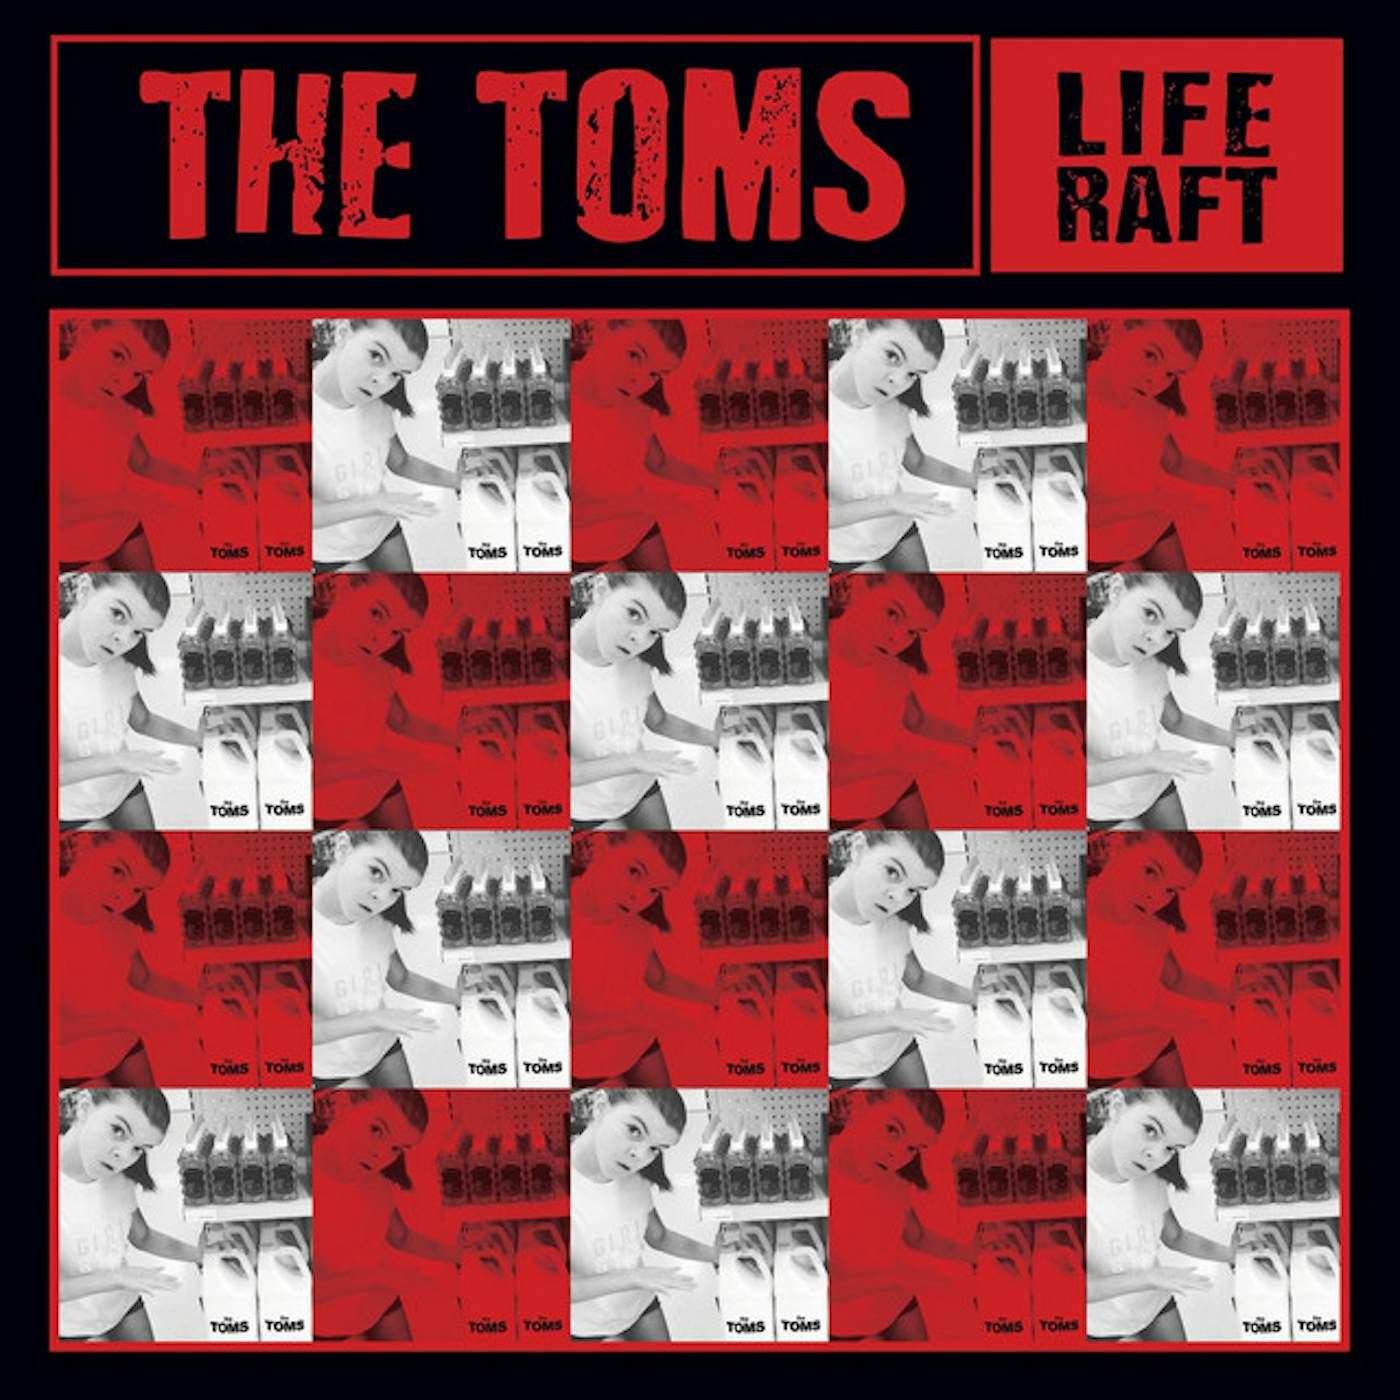 Toms LIFE RAFT CD